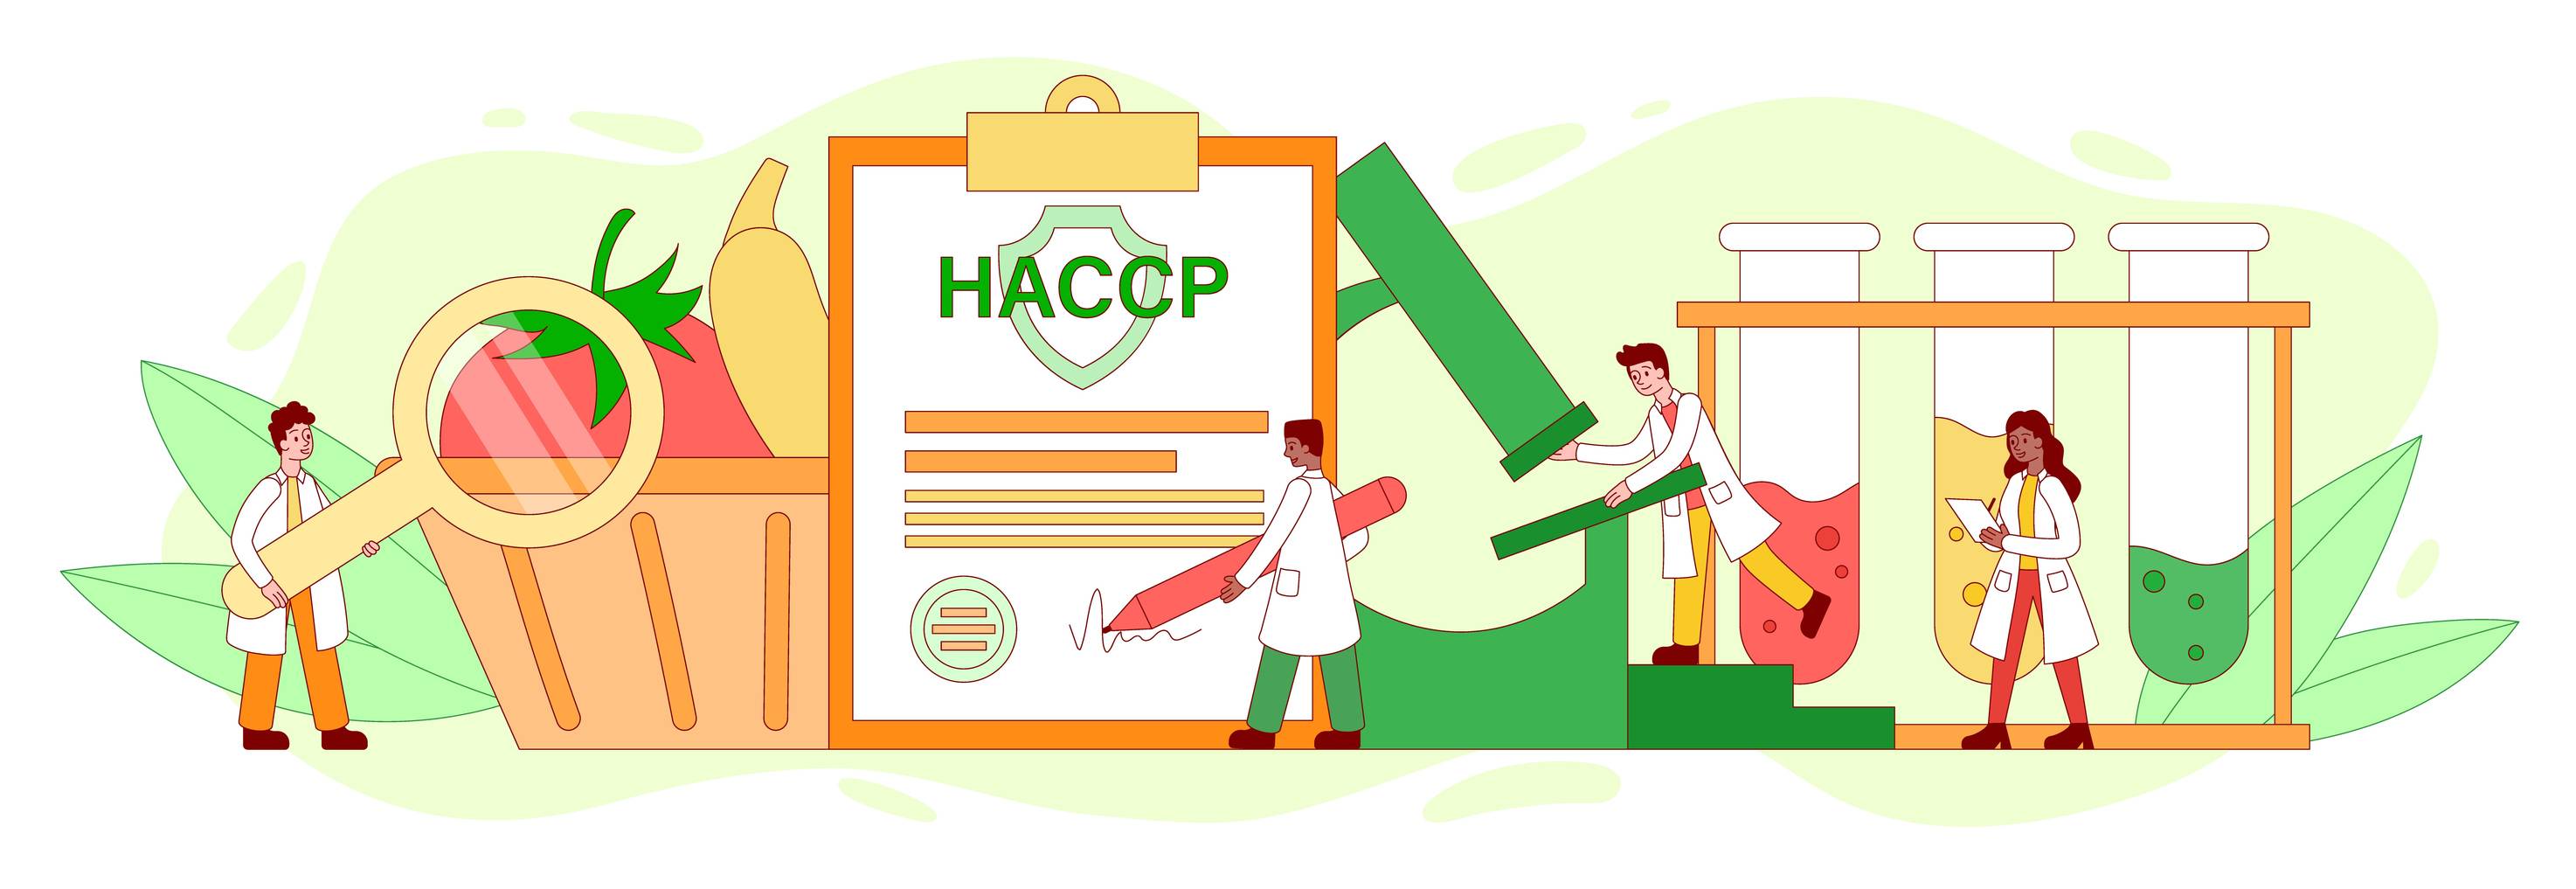 Que signifie HACCP ?